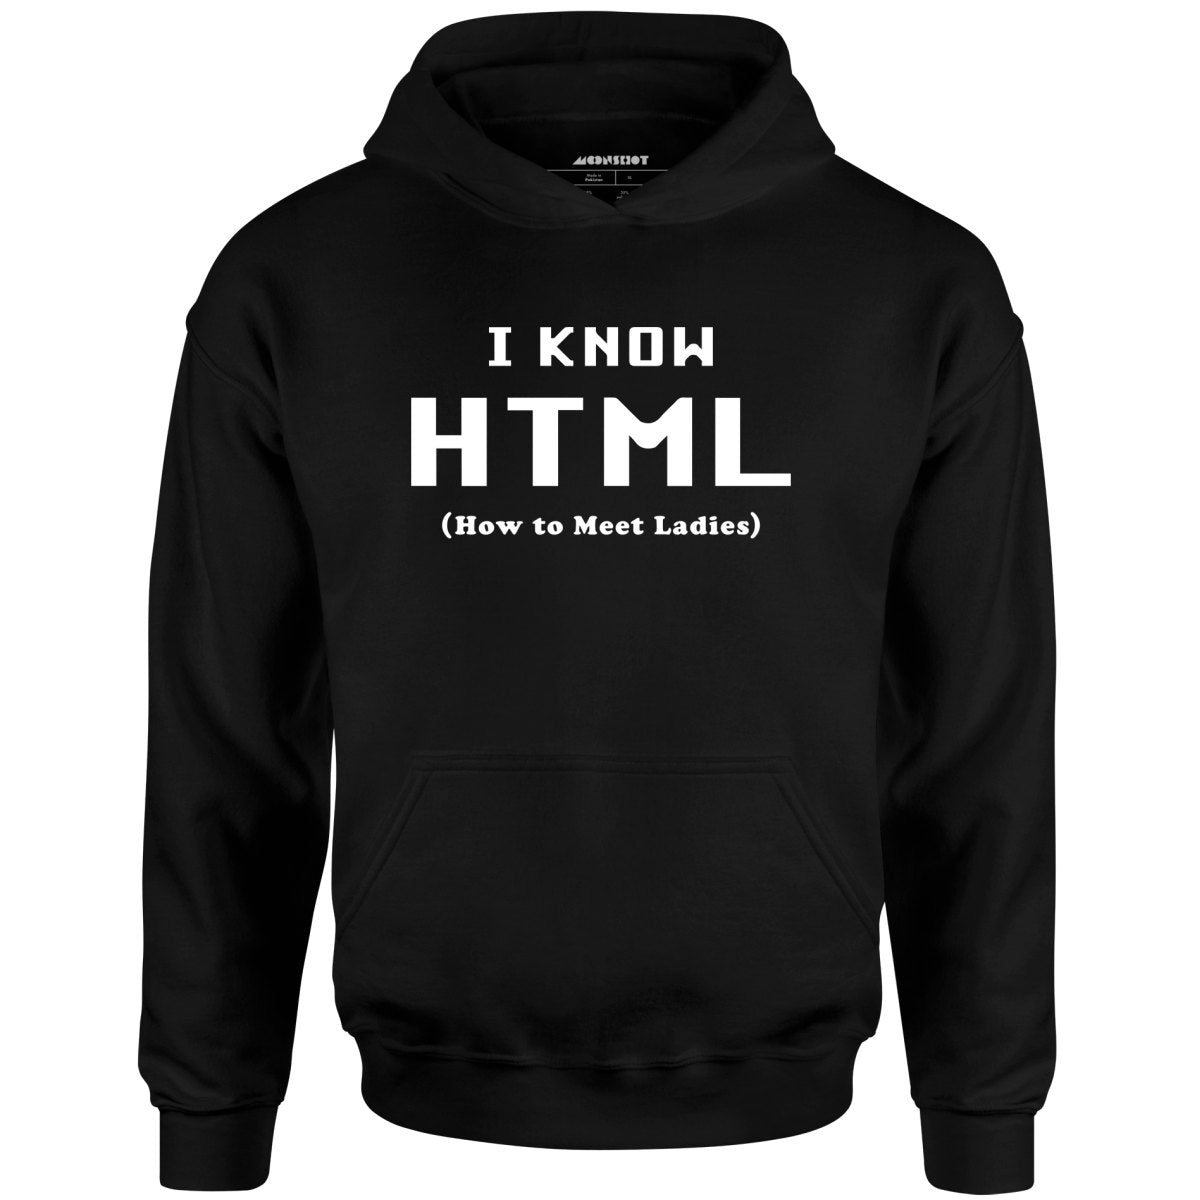 I Know HTML - How to Meet Ladies - Unisex Hoodie